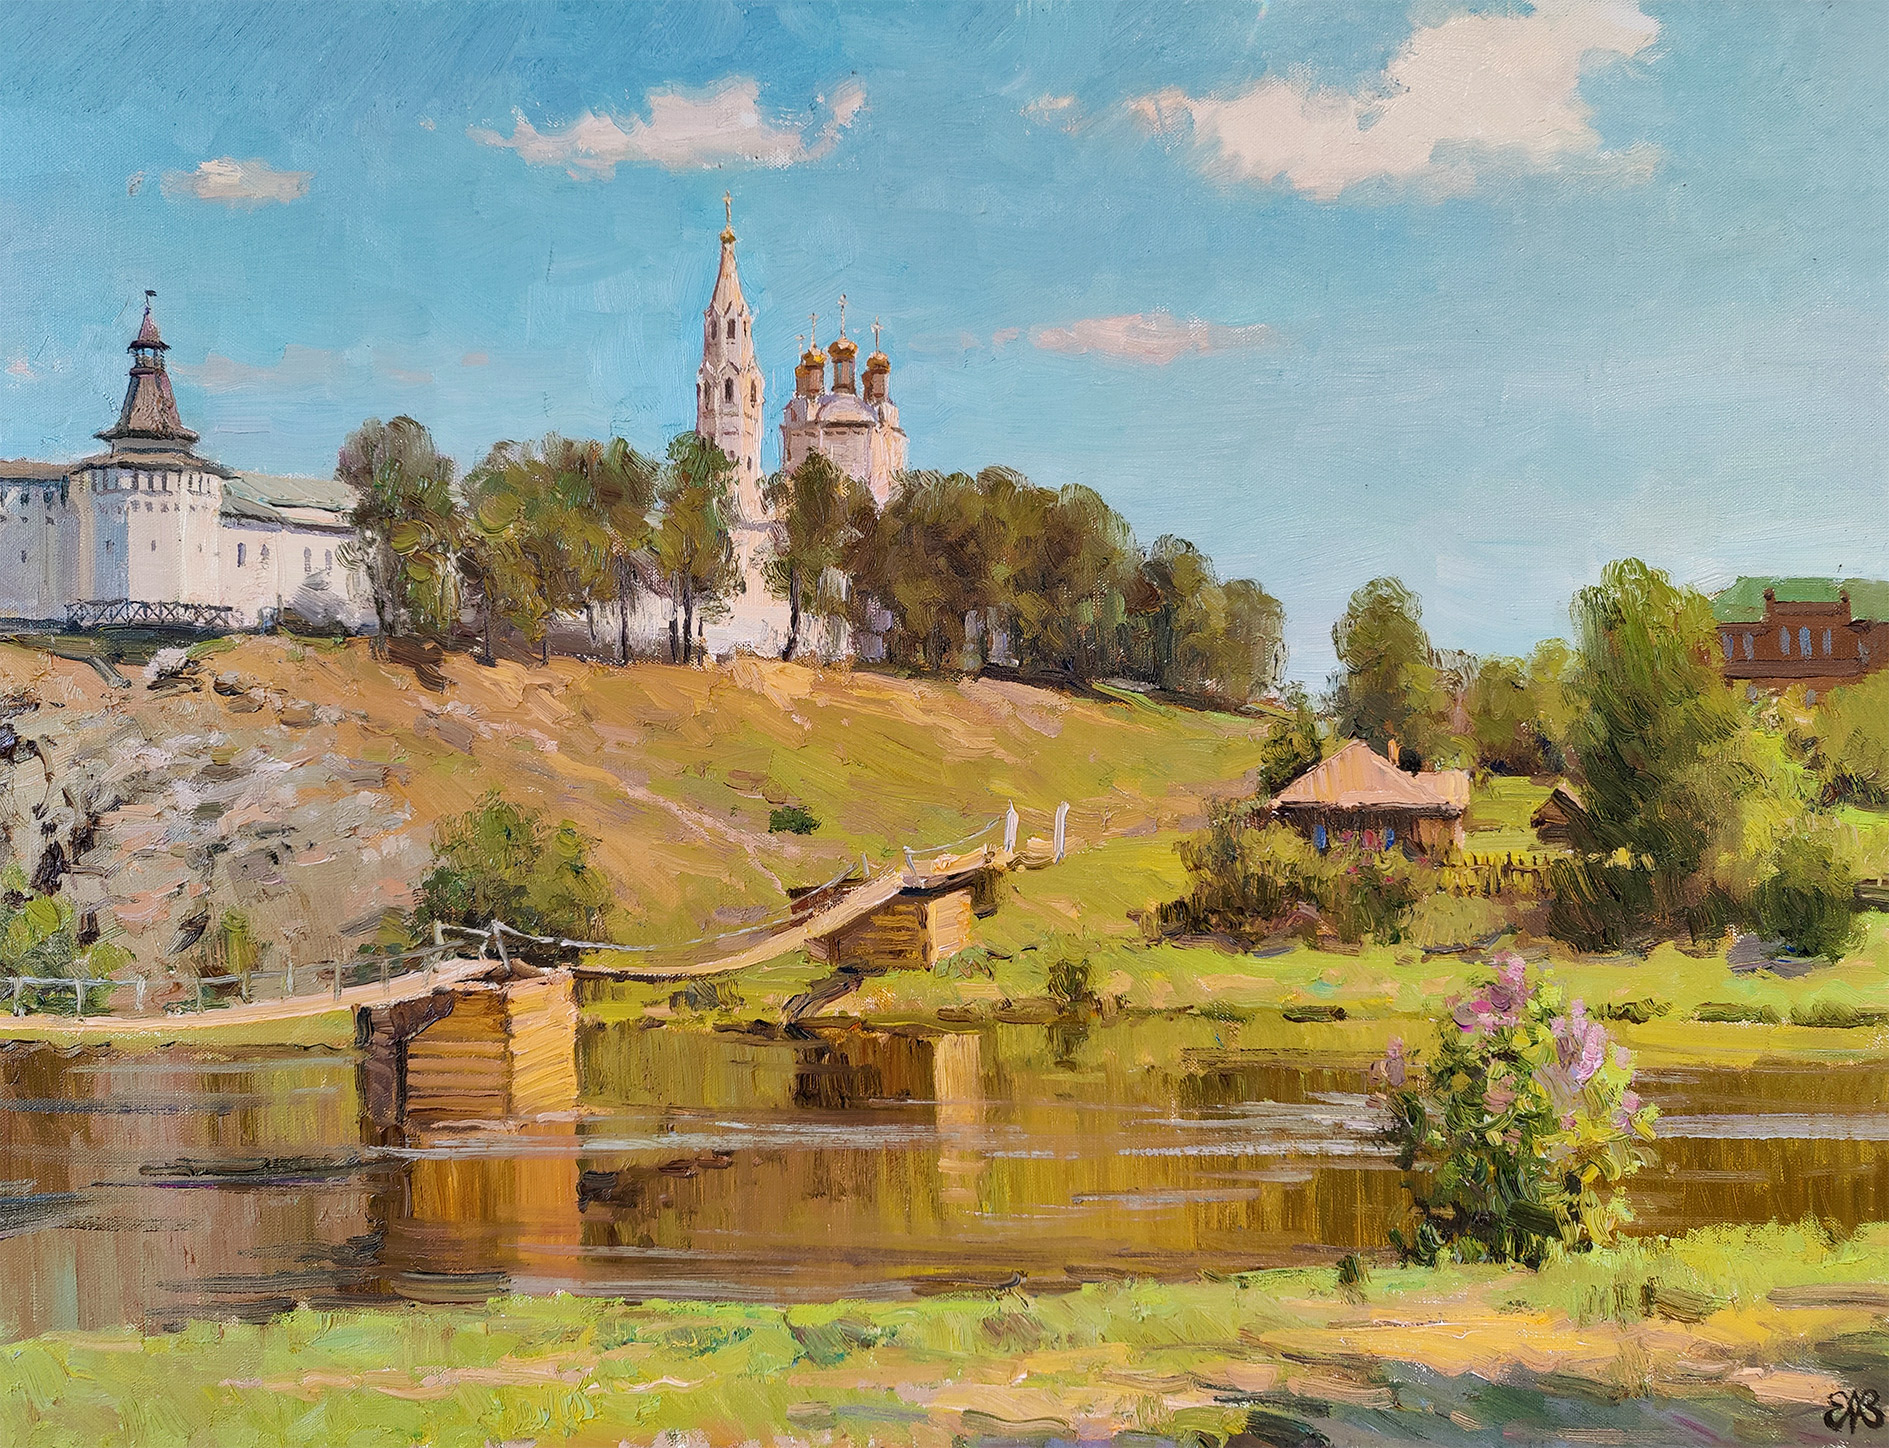 Verkhoturye. Grace - 1, Alexey Efremov, Buy the painting Oil